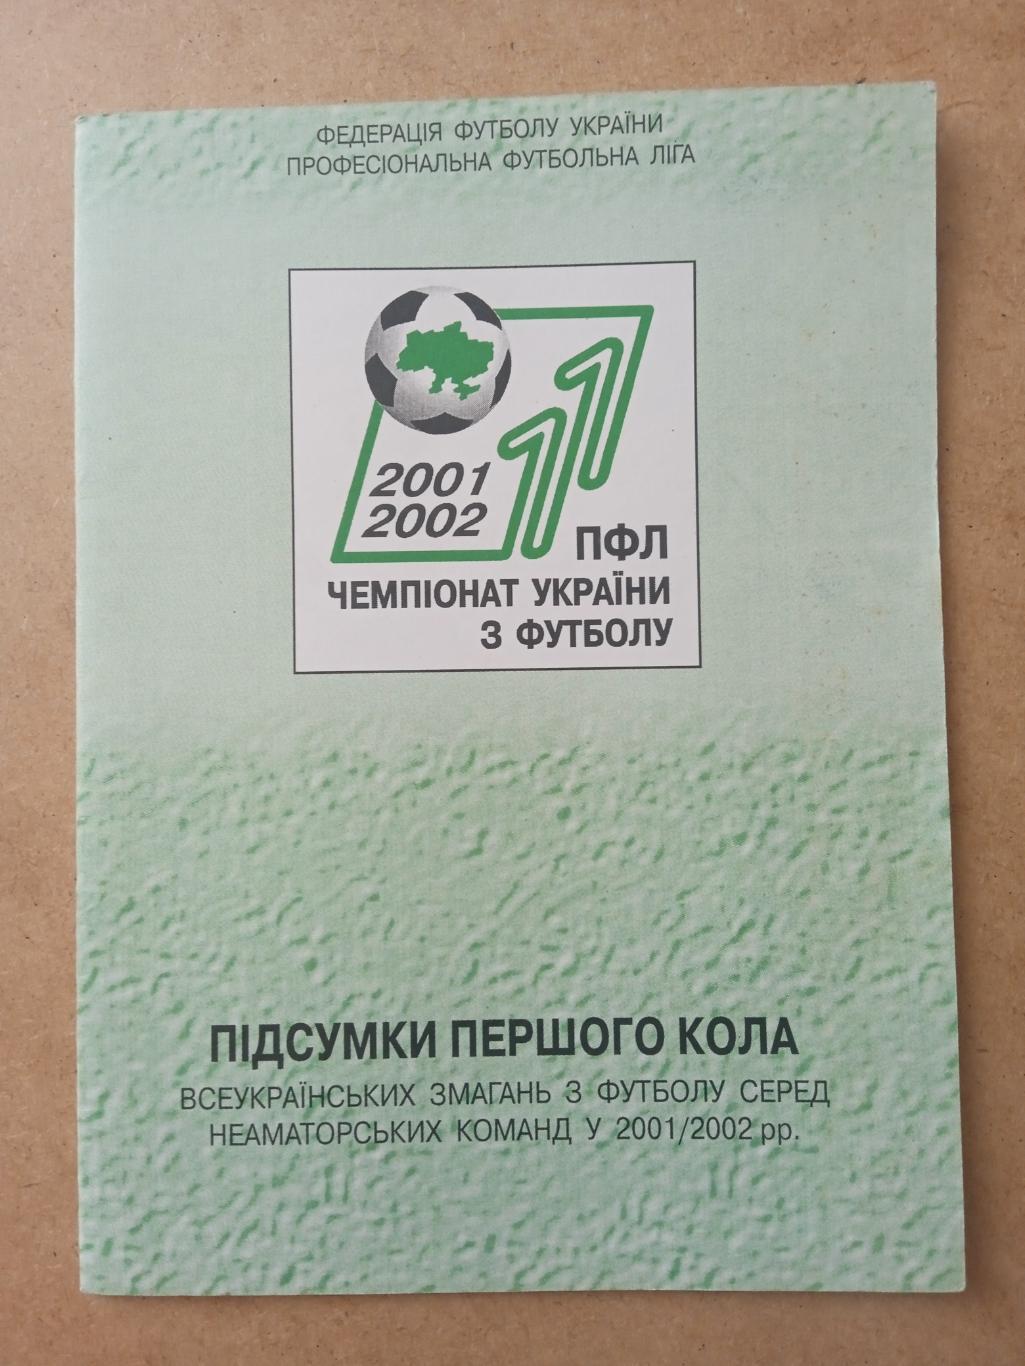 Украина-2001/2002.ПФЛ чемпионат.Итоги